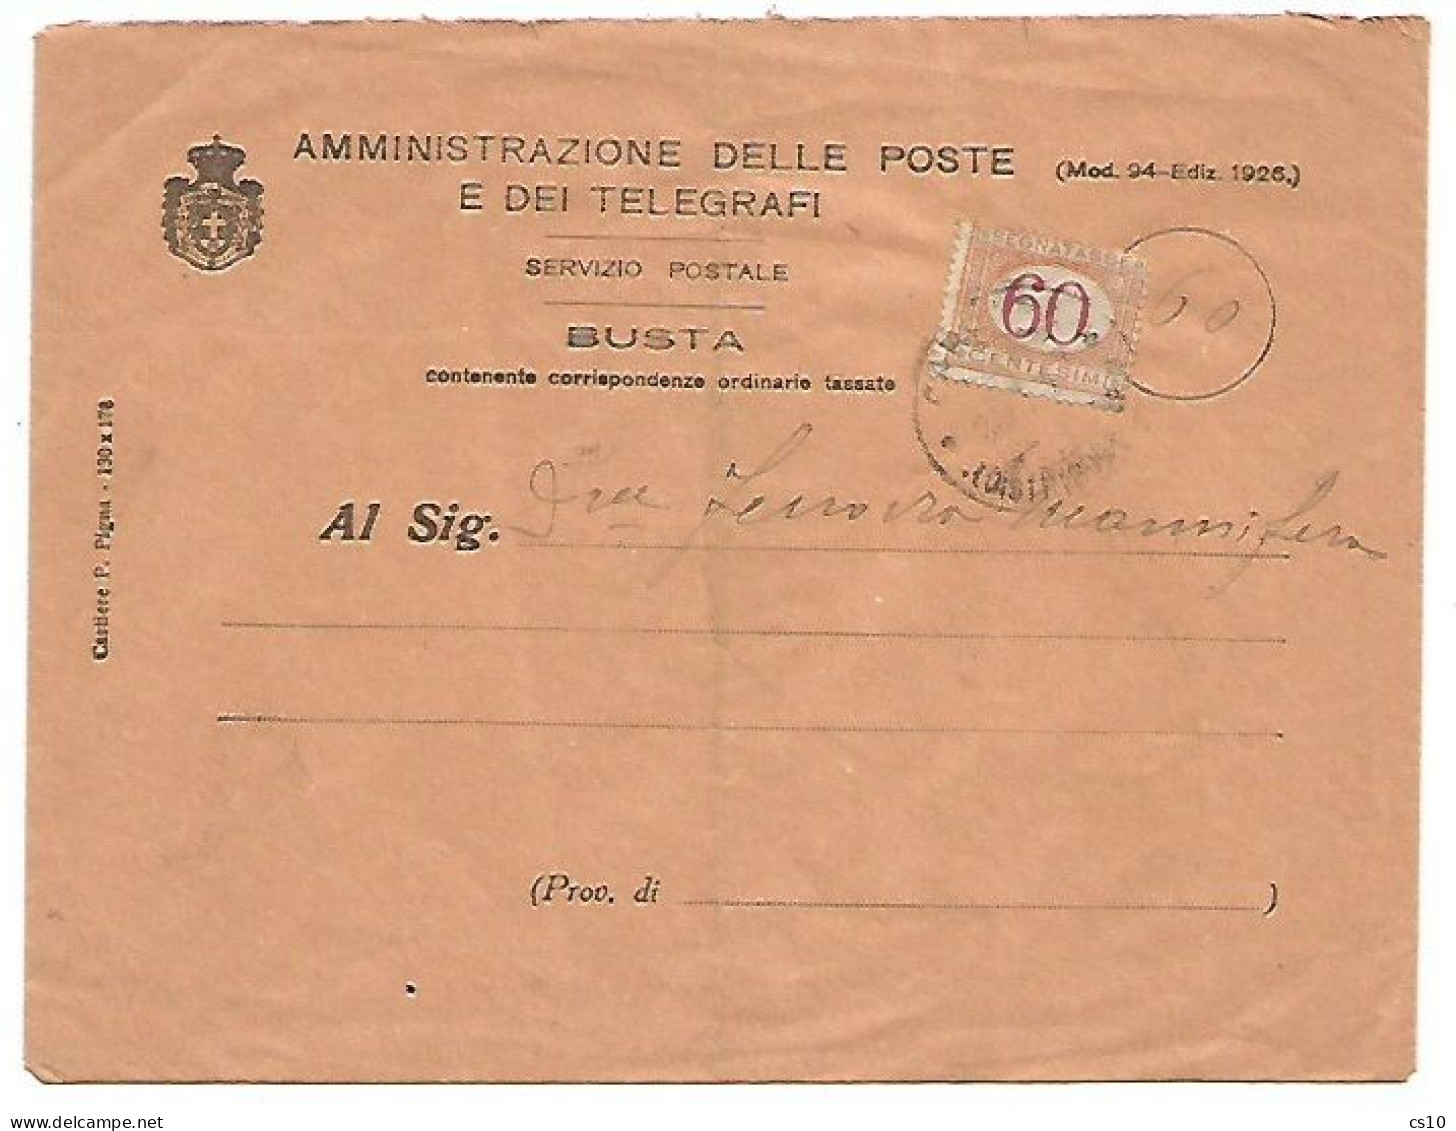 SegnaTasse Cifra Carminio C.60 #26 Isolato TC Busta Amm.PPTT Carrara 1926 X Ferrovia Marmifera - Postage Due